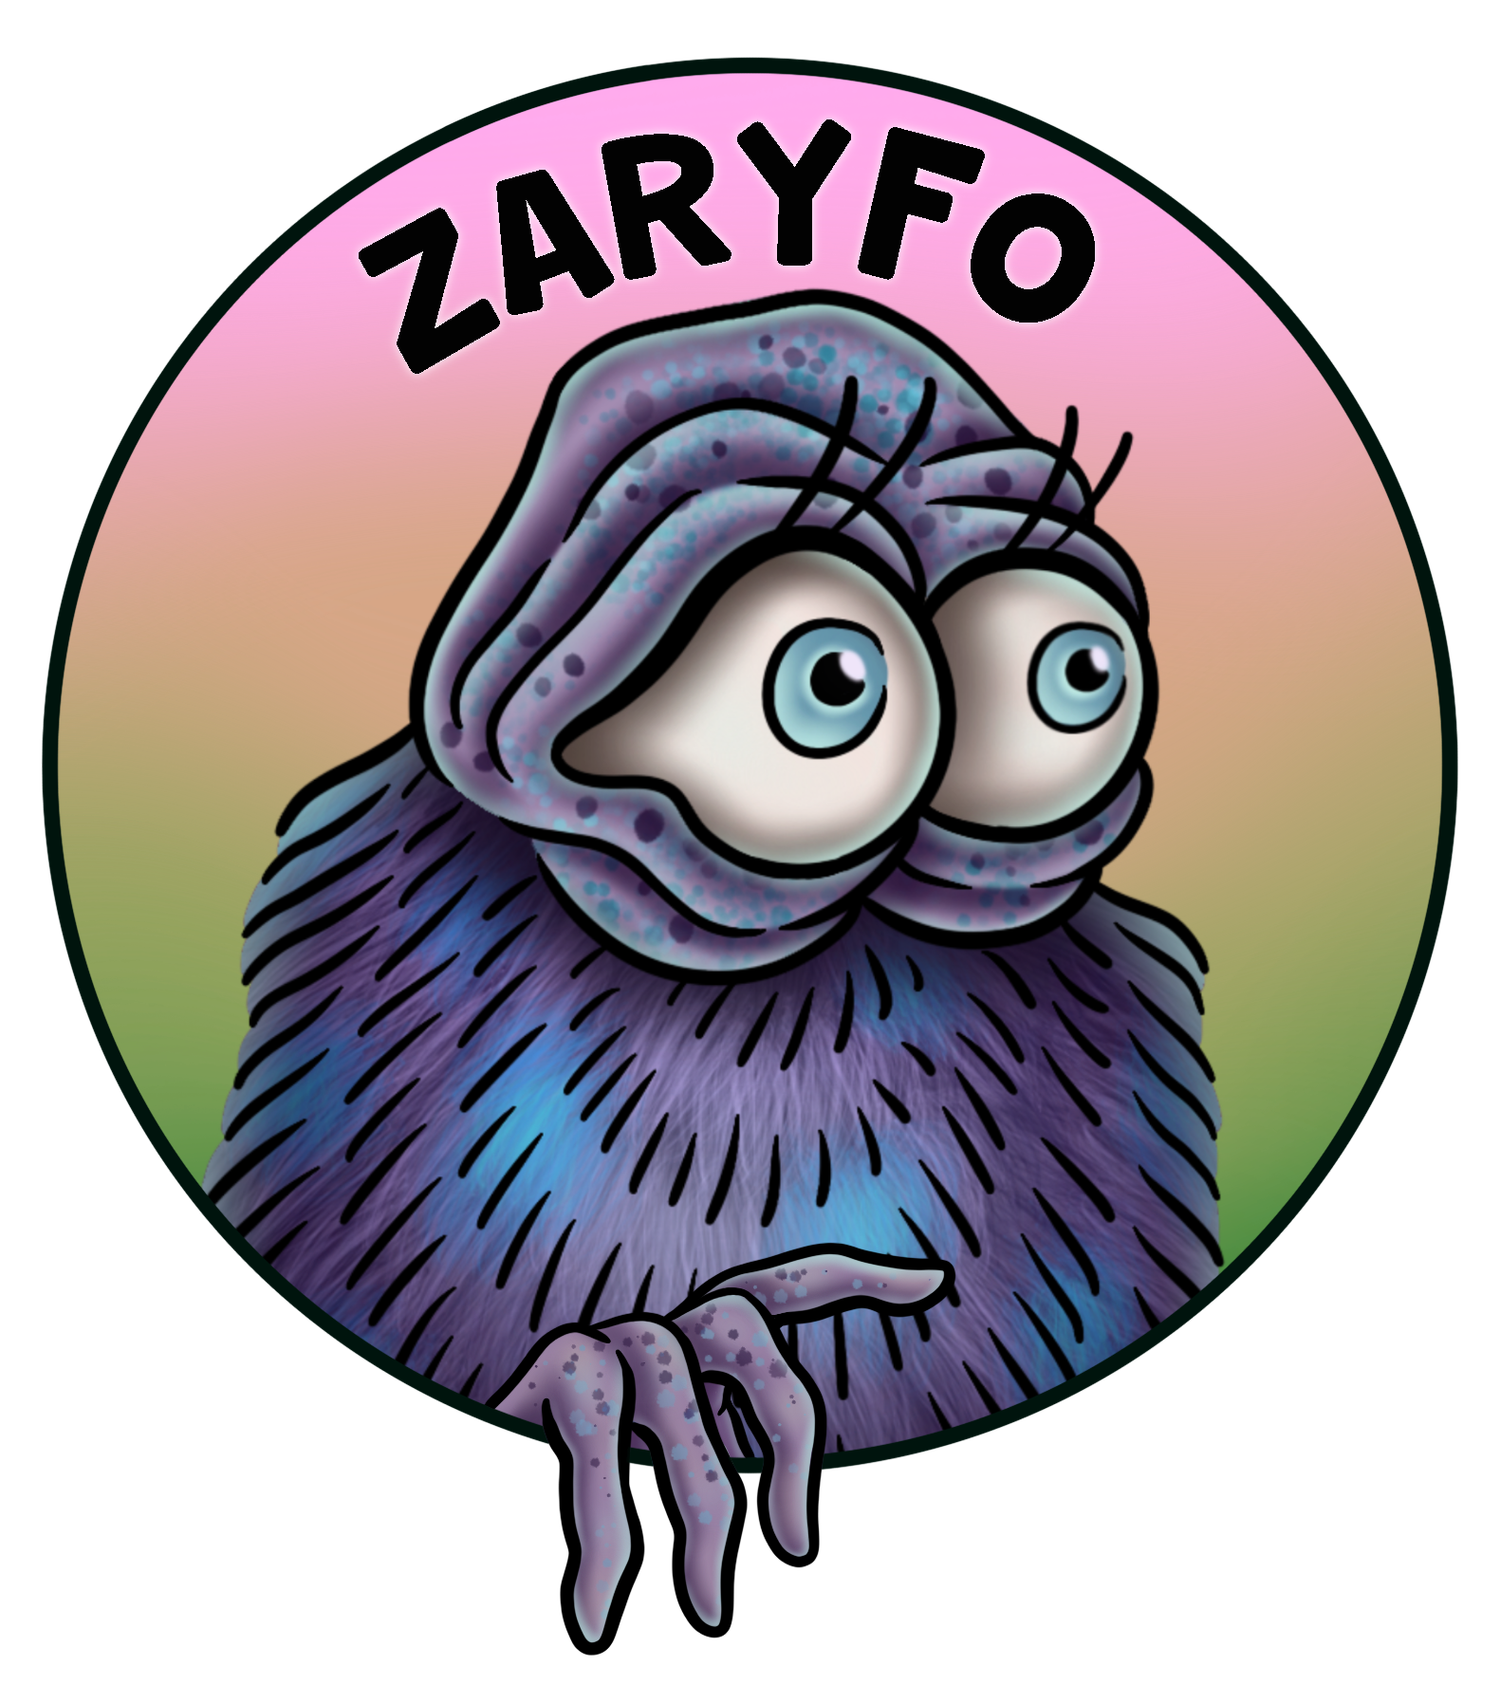 Zaryfo 